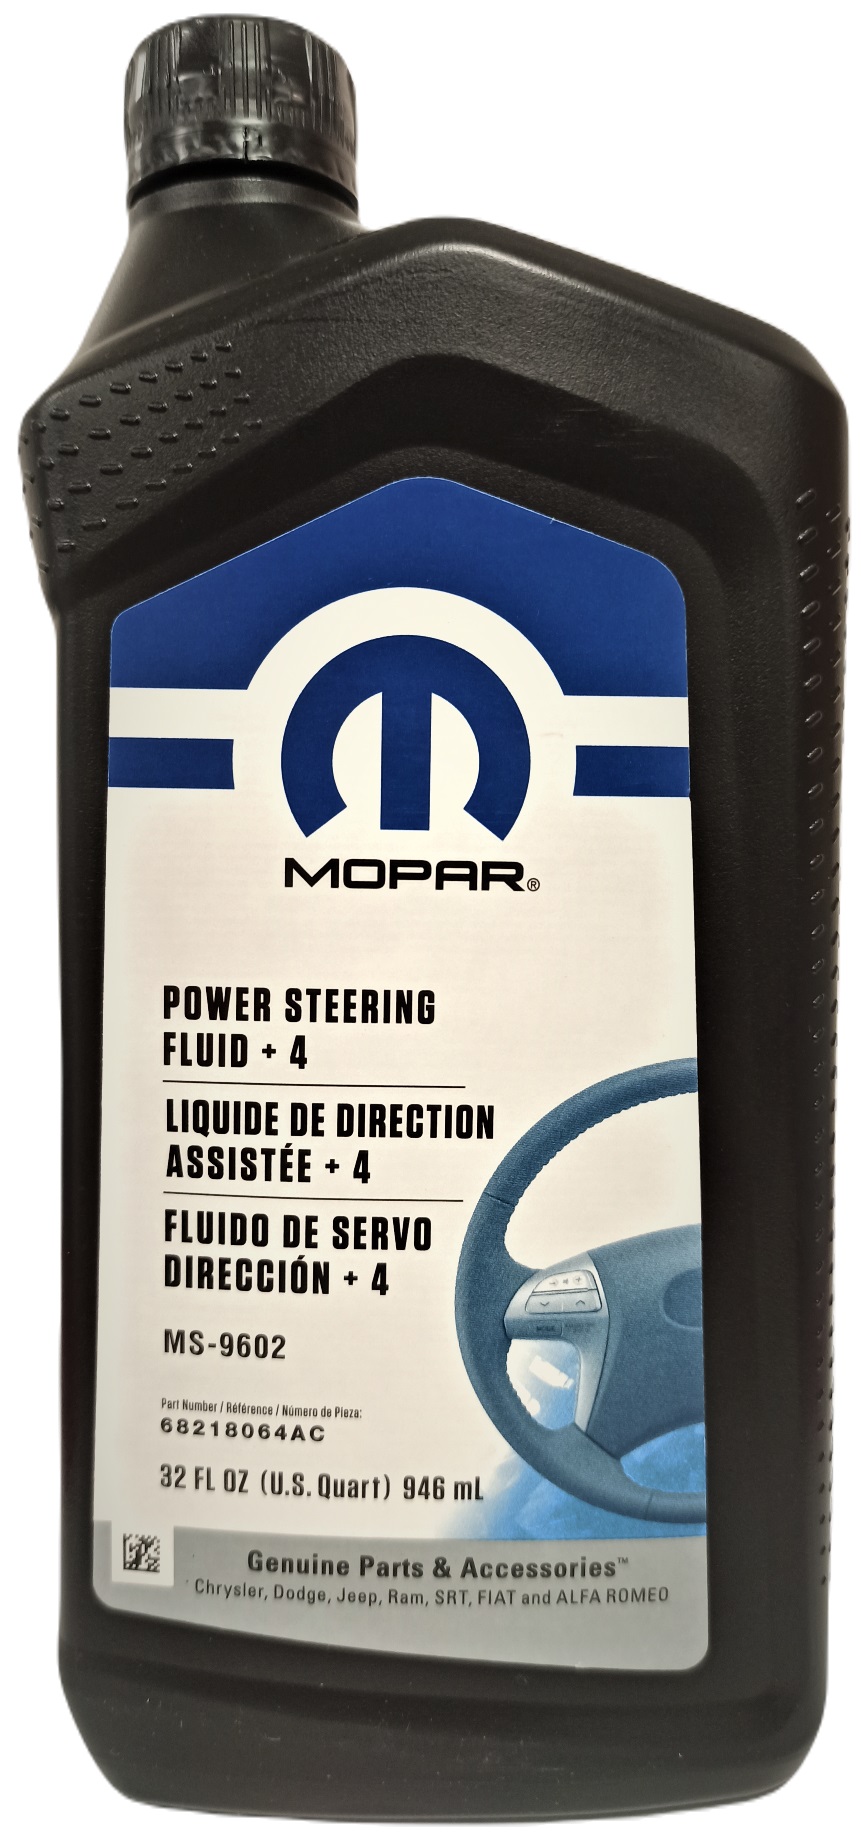 Mopar 6806 8967AC Power Steering Reservoir 